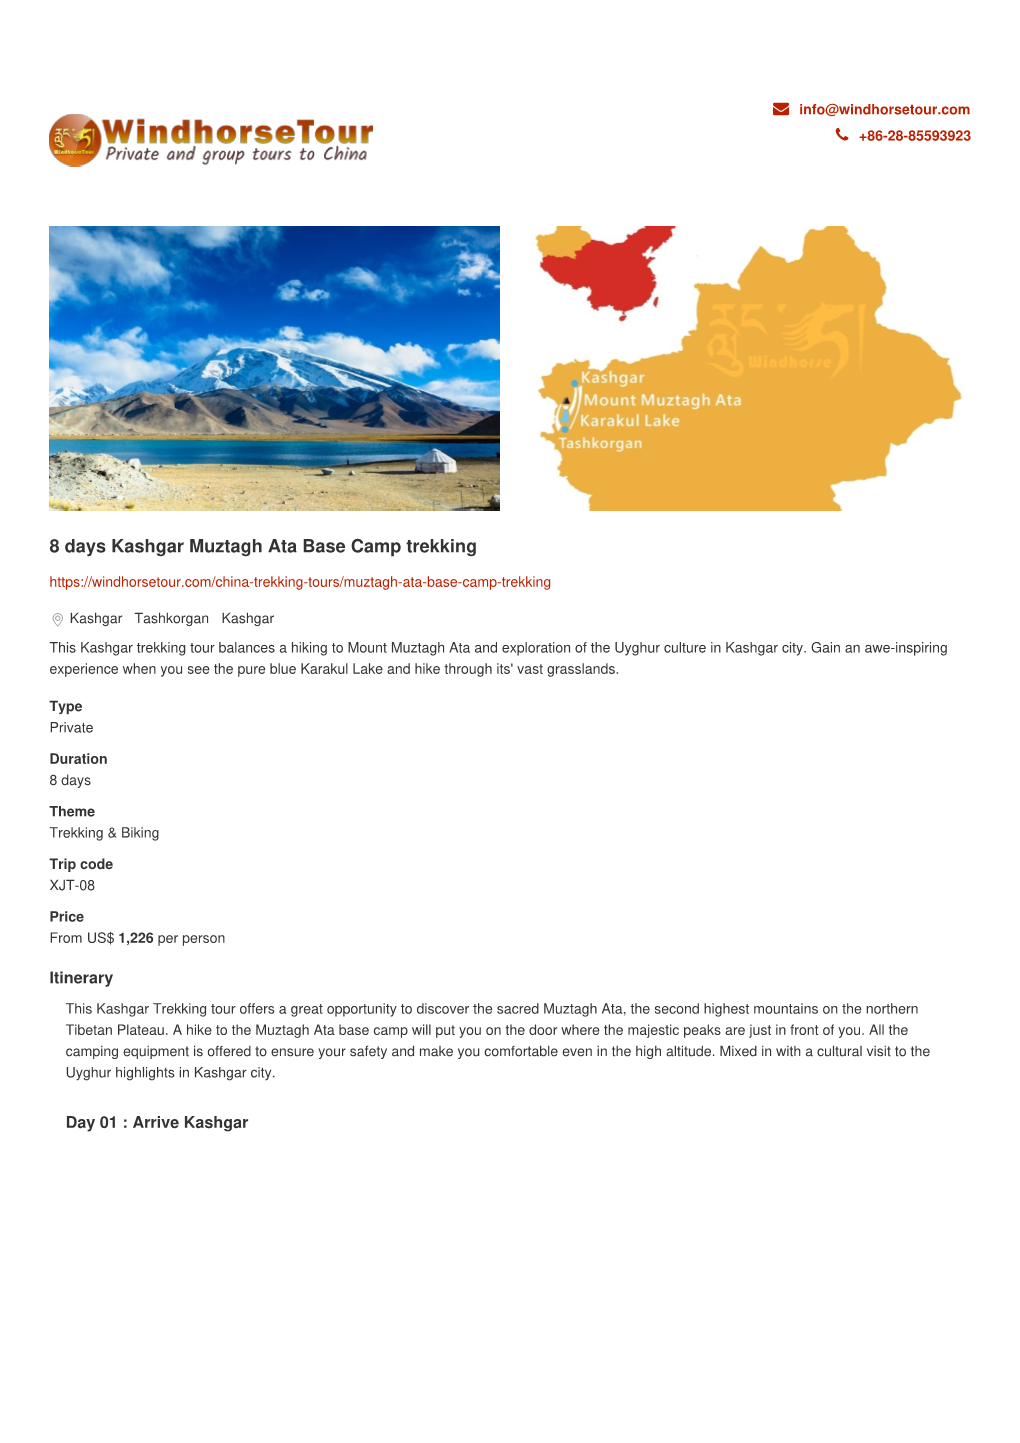 8 Days Kashgar Muztagh Ata Base Camp Trekking